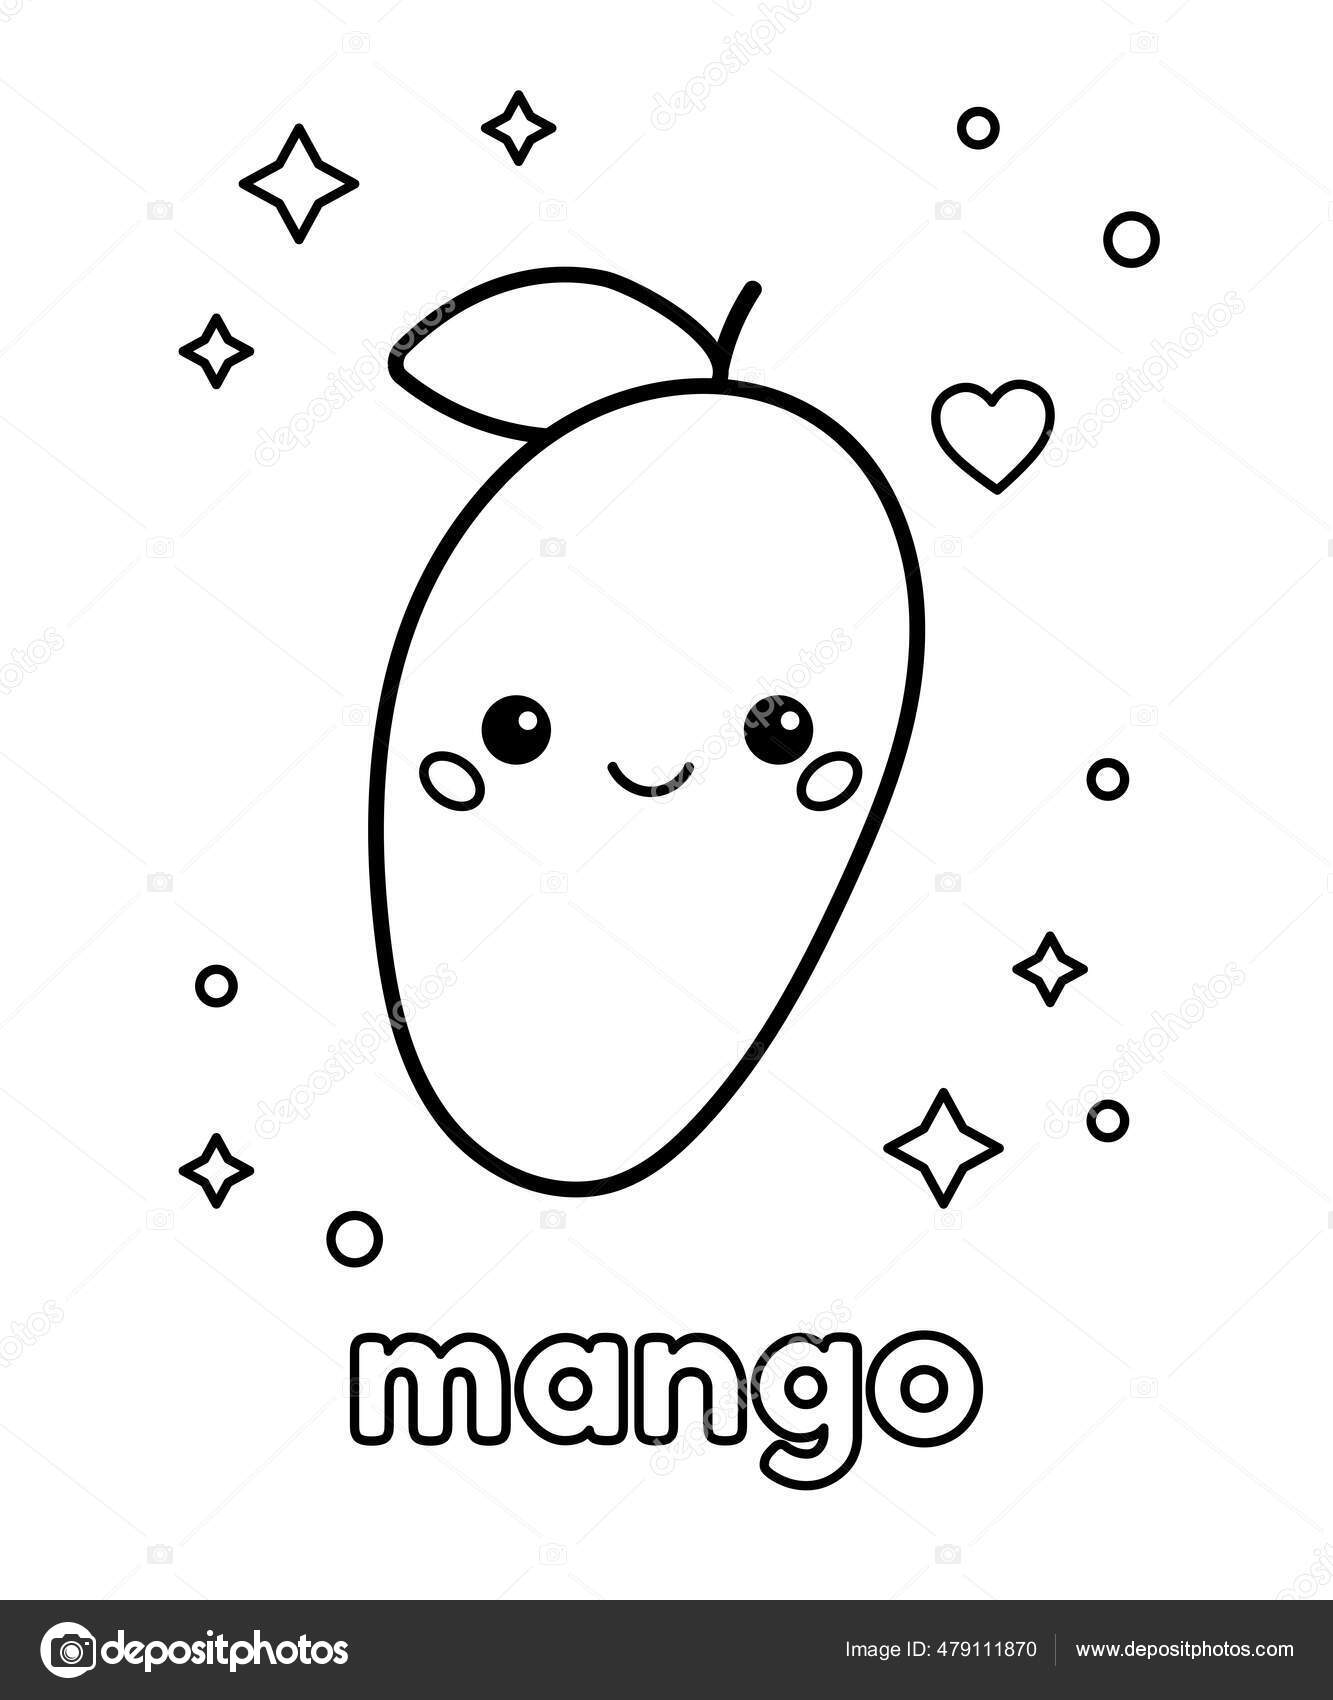 Coloring page kids cute cartoon mango happy face kawaii fruit stock vector by kristina